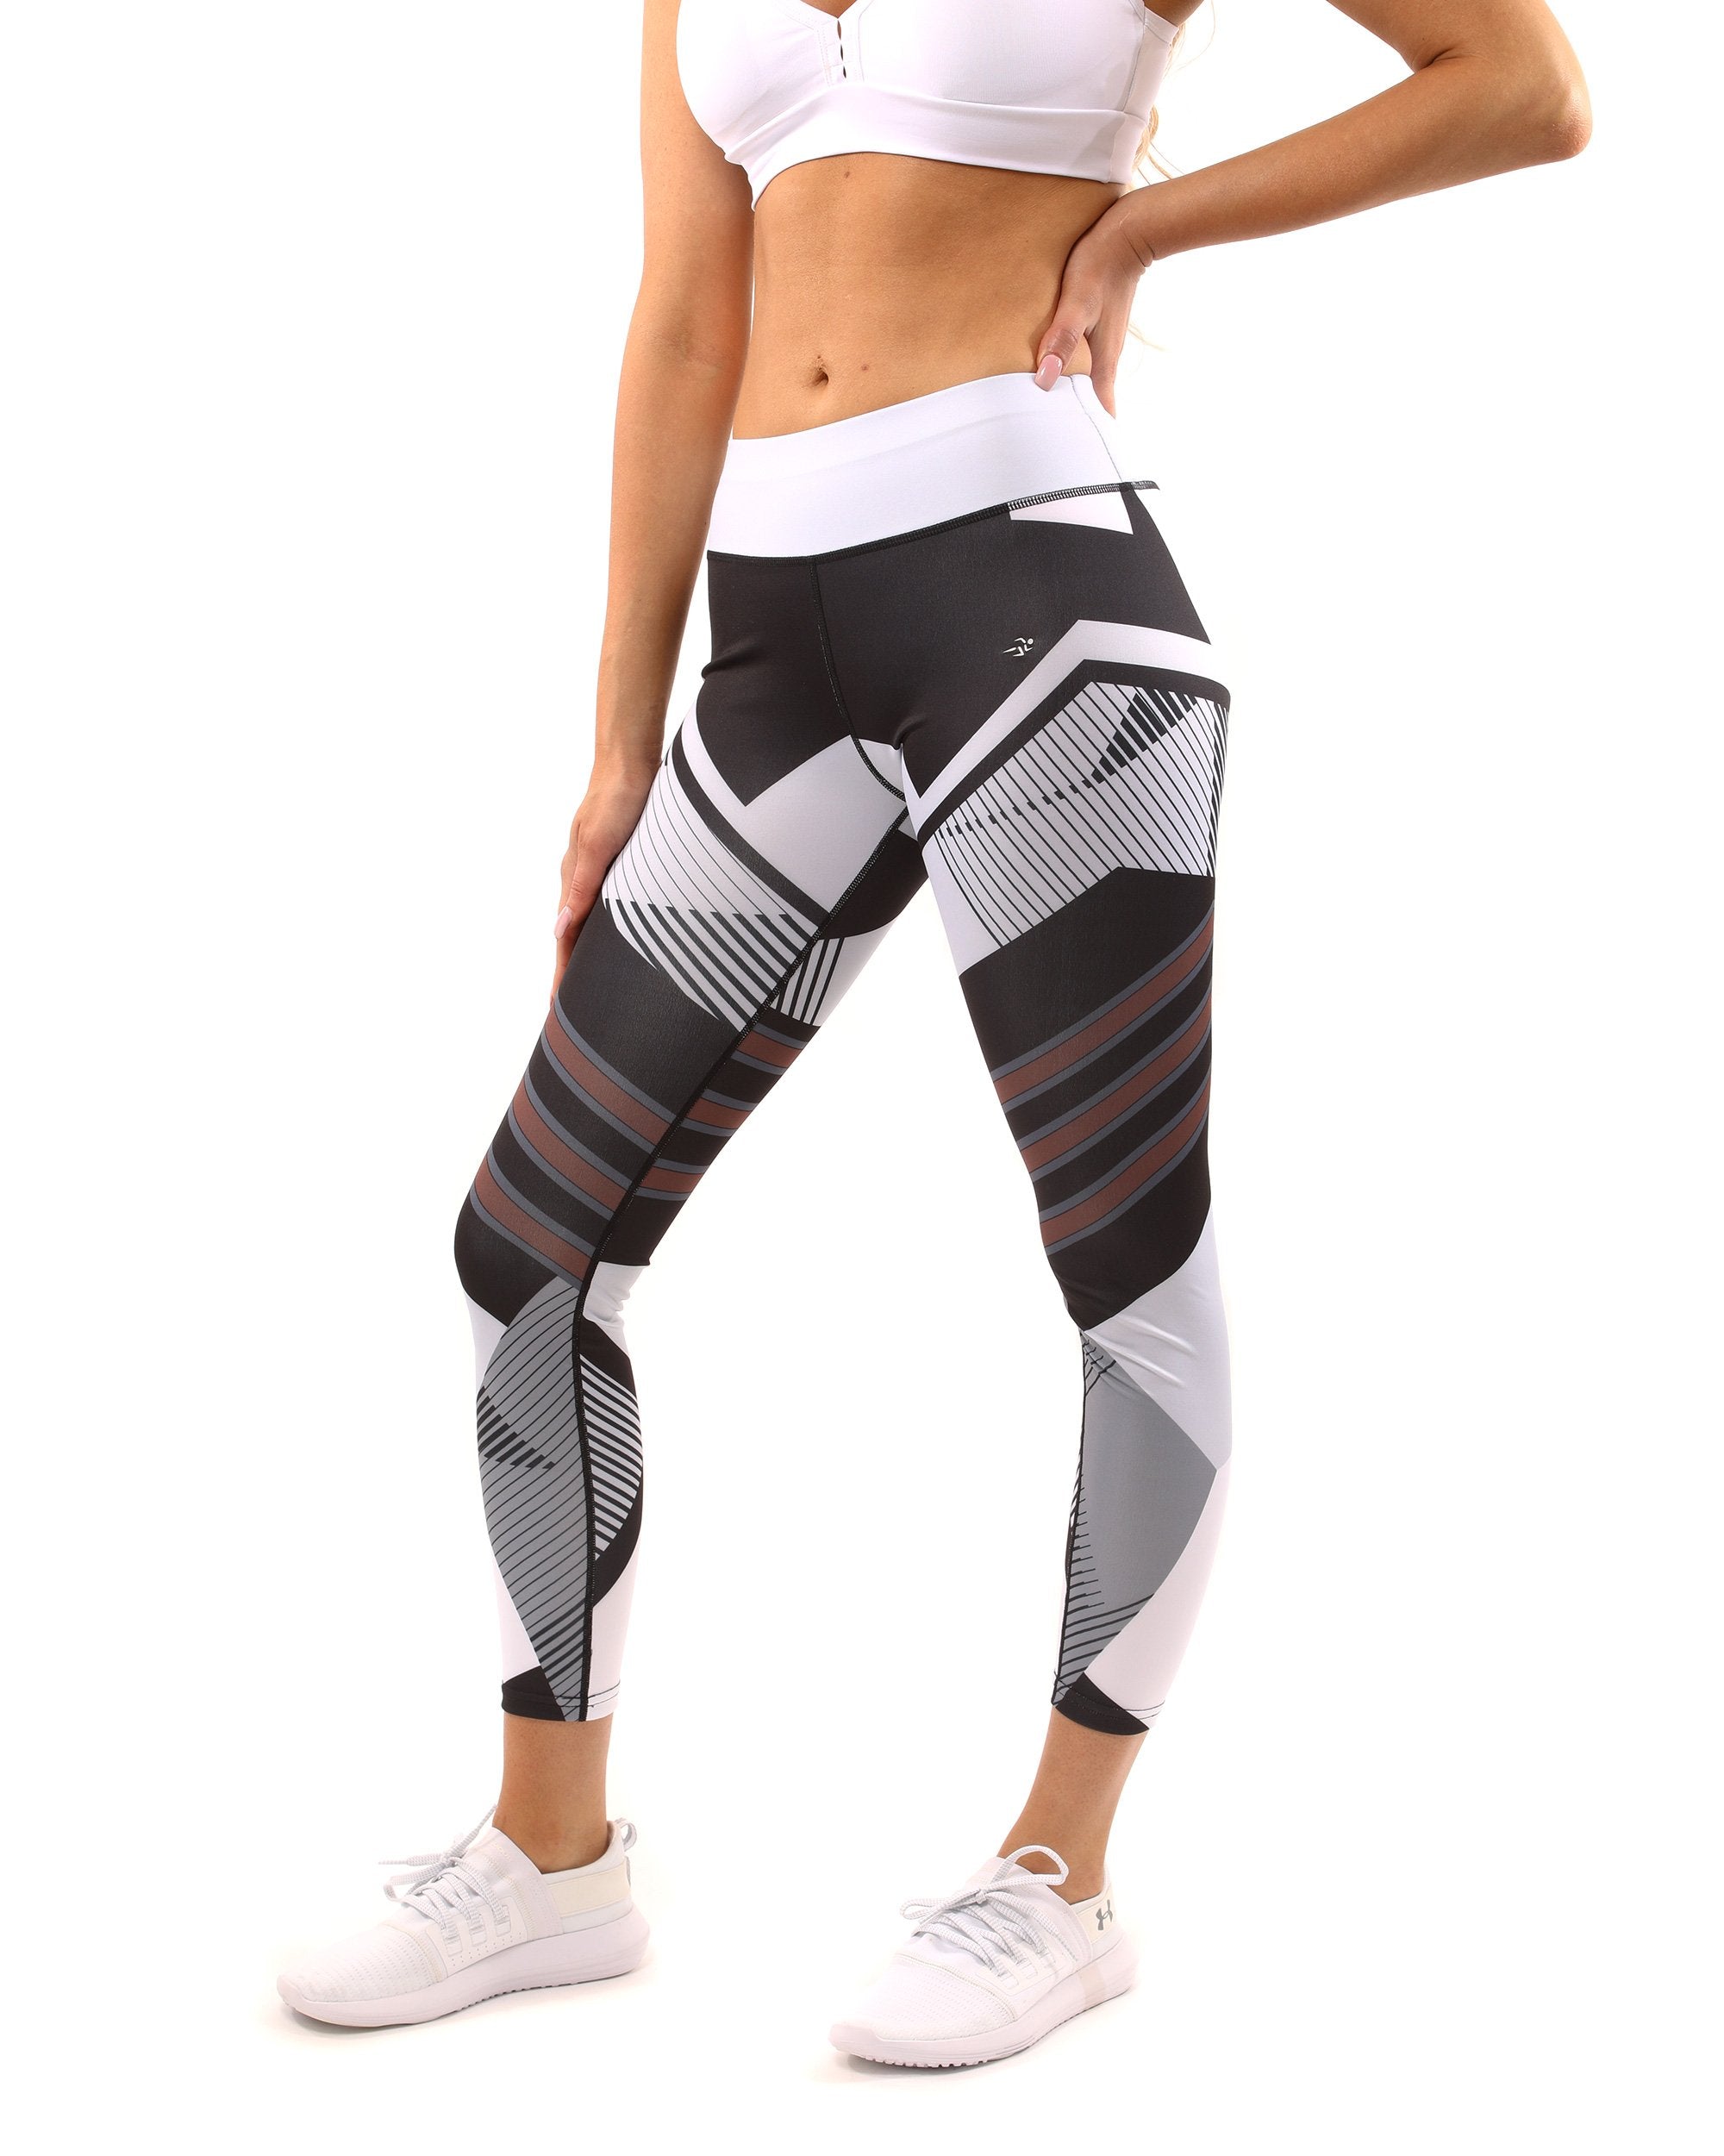 Black and White Stripe Leggings  - Yoga Running Cycling Jogging Gym